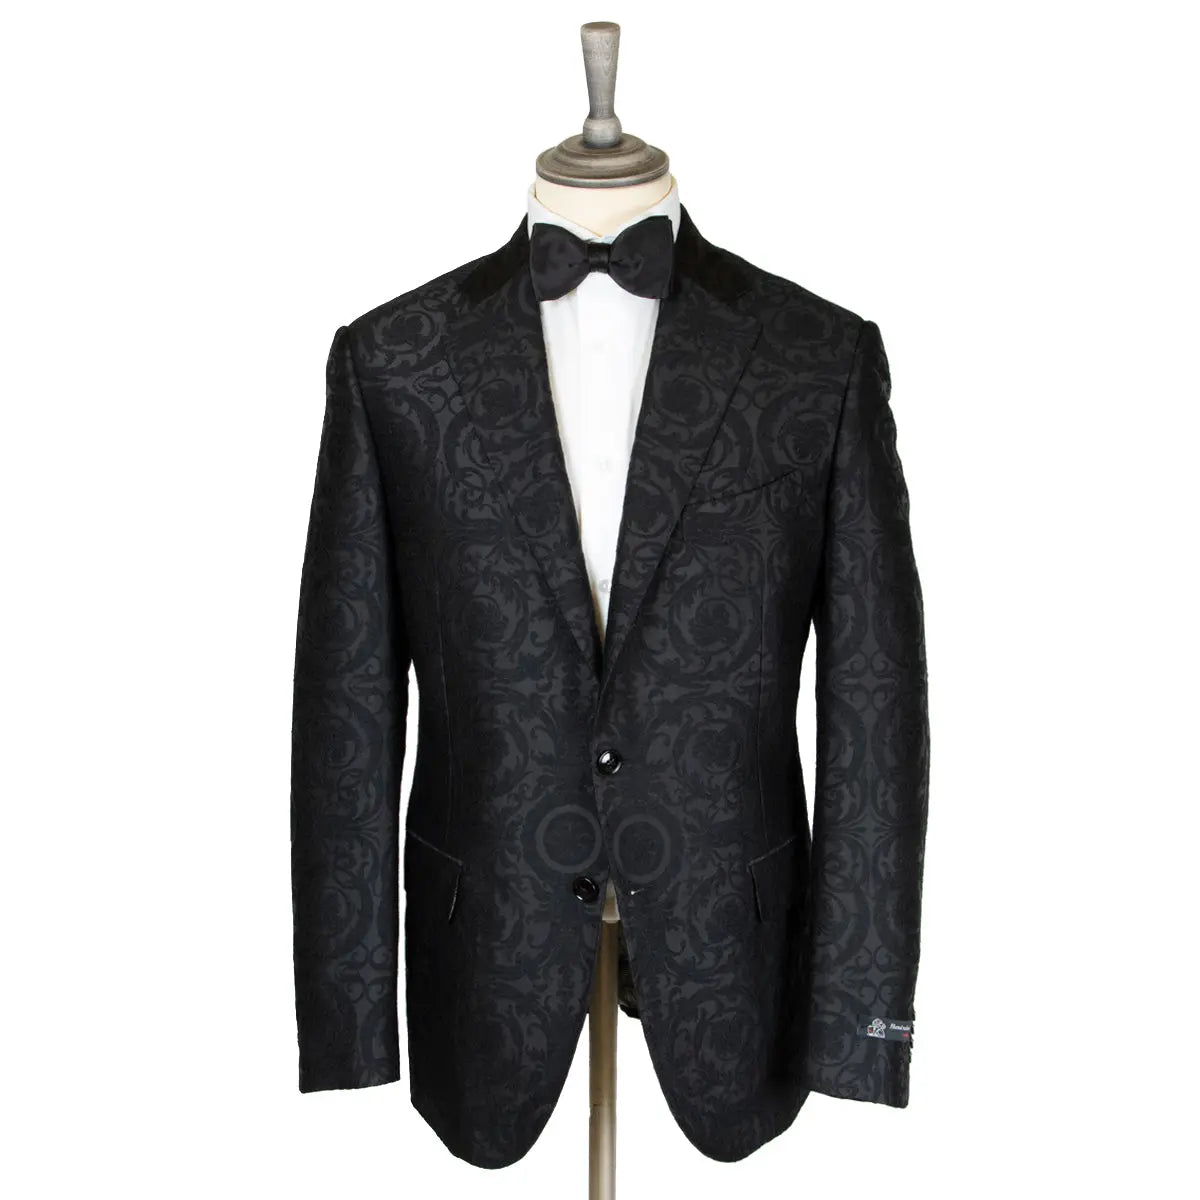 Black Wool & Silk Jacquard Woven Jacket  Robert Old   